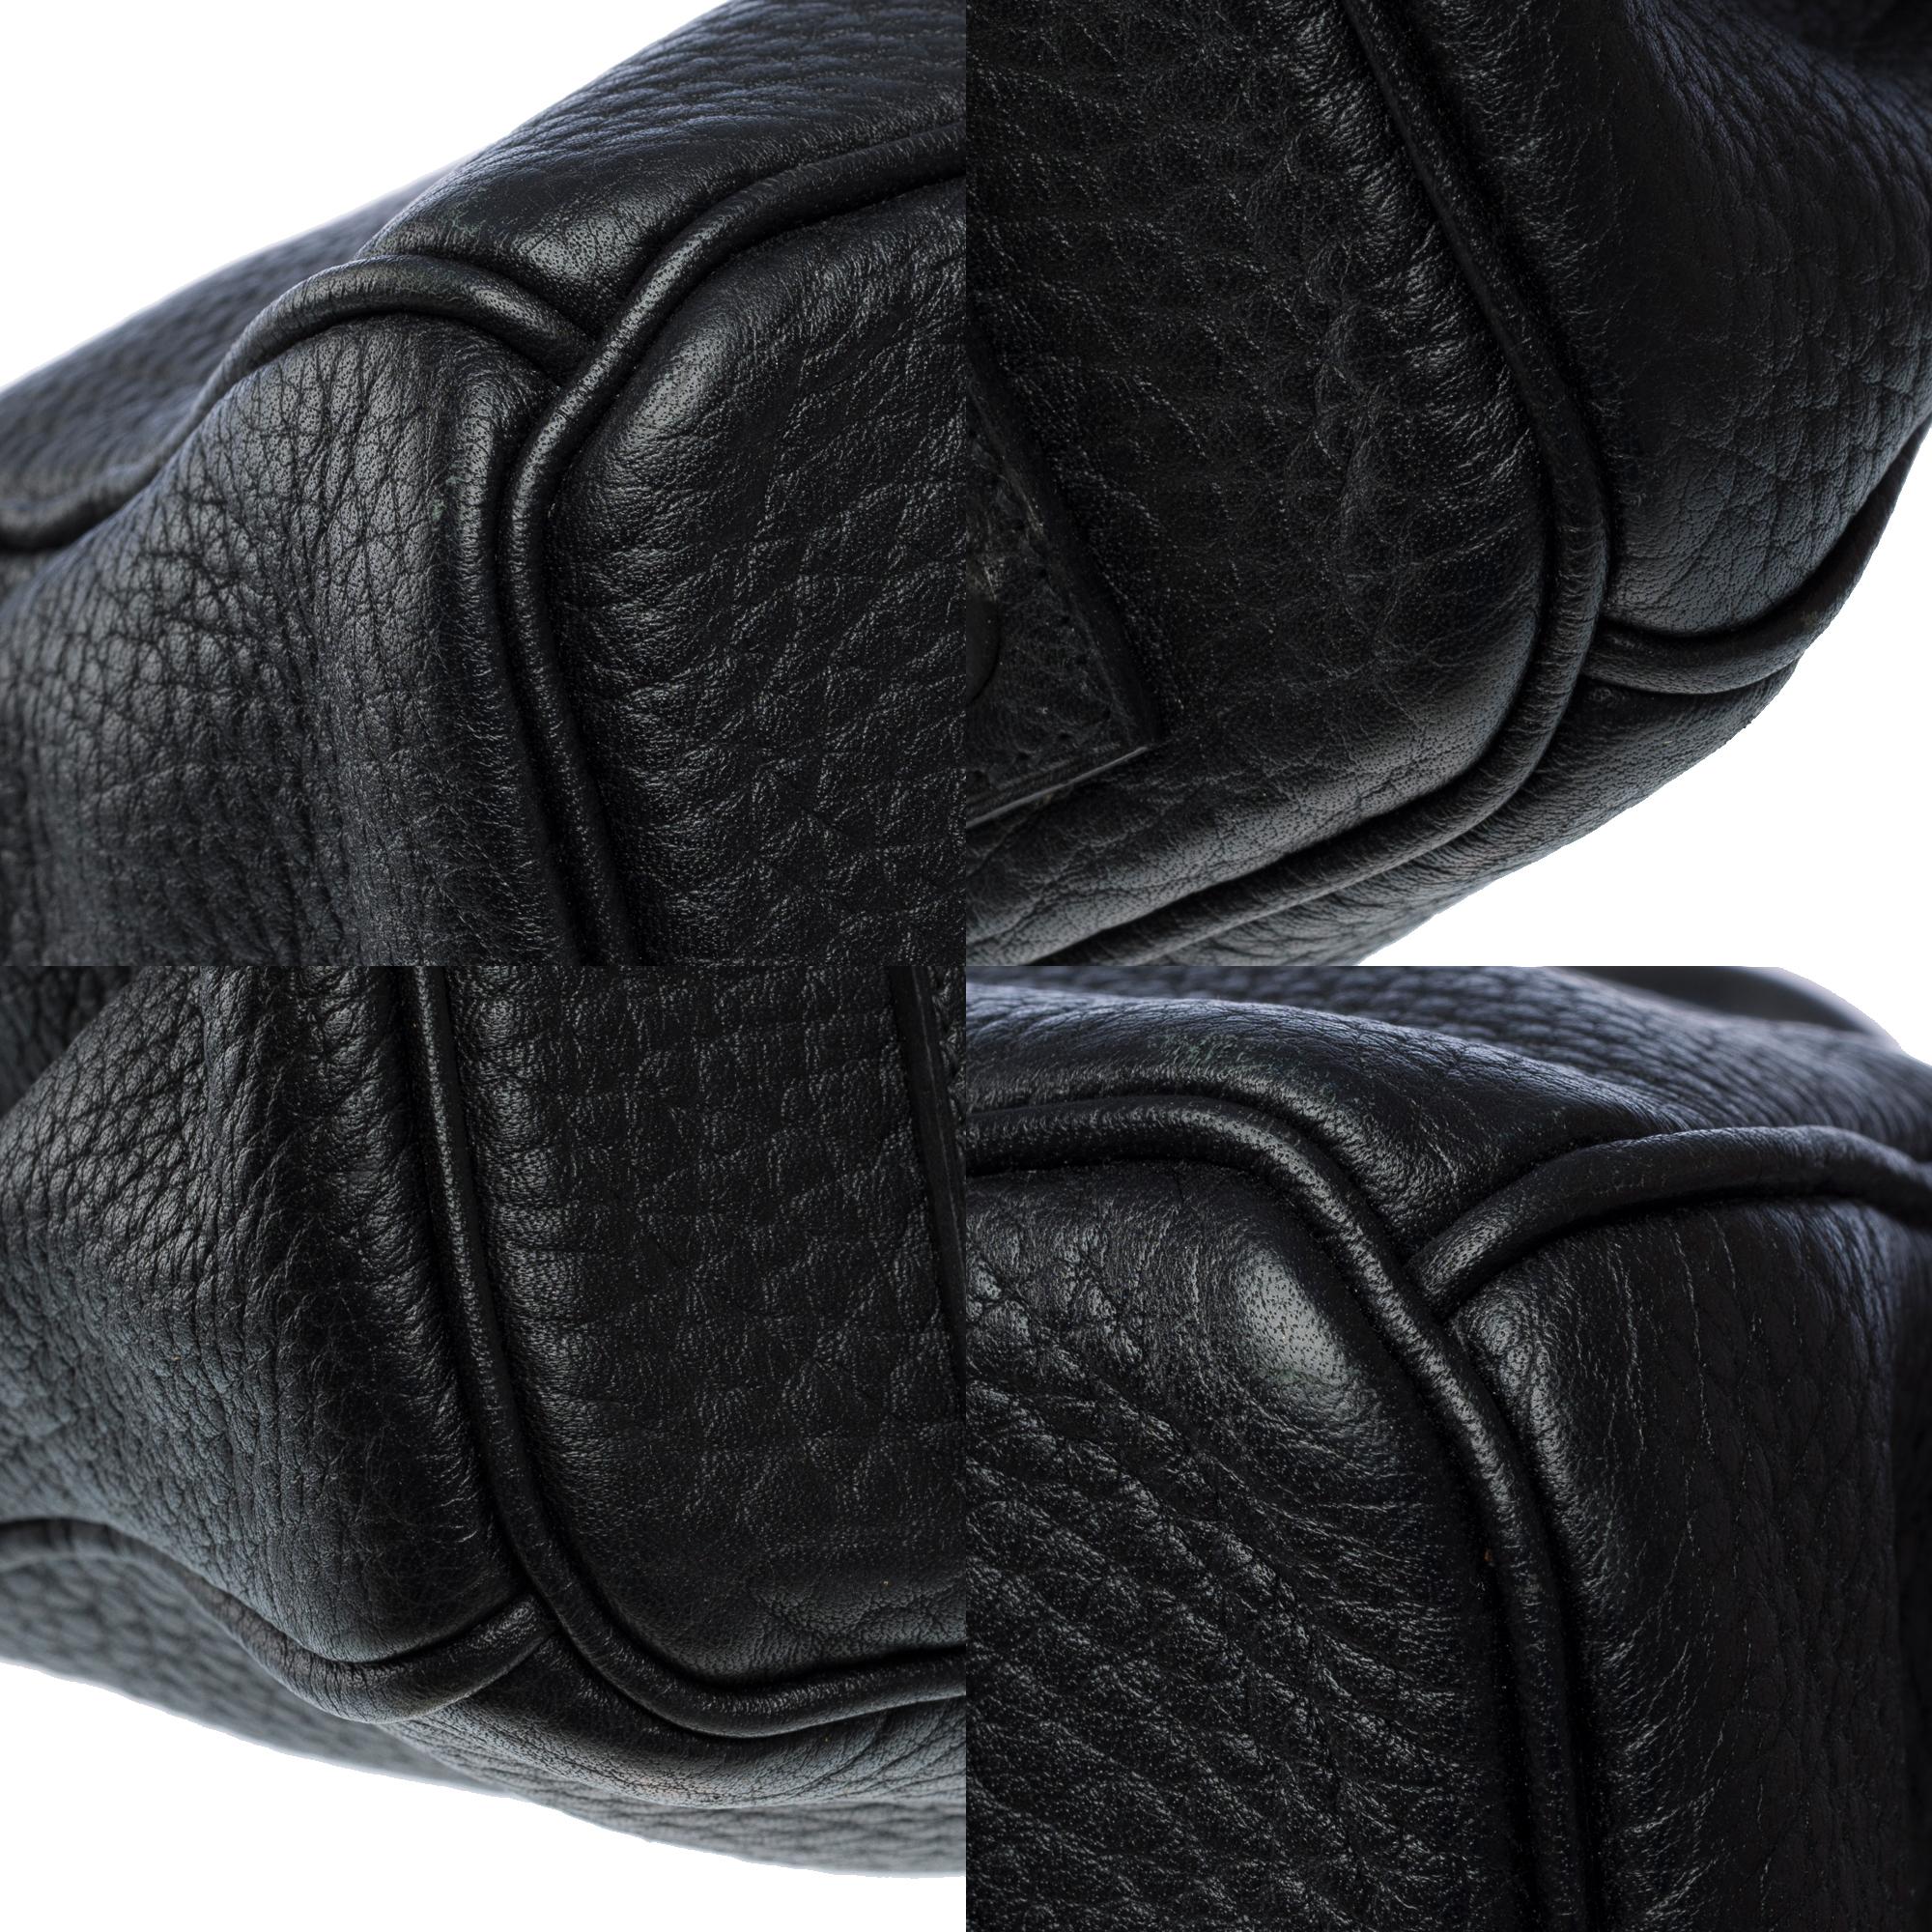 Classy Hermes Birkin 40cm handbag in Black Fjord calf leather, SHW For Sale 7